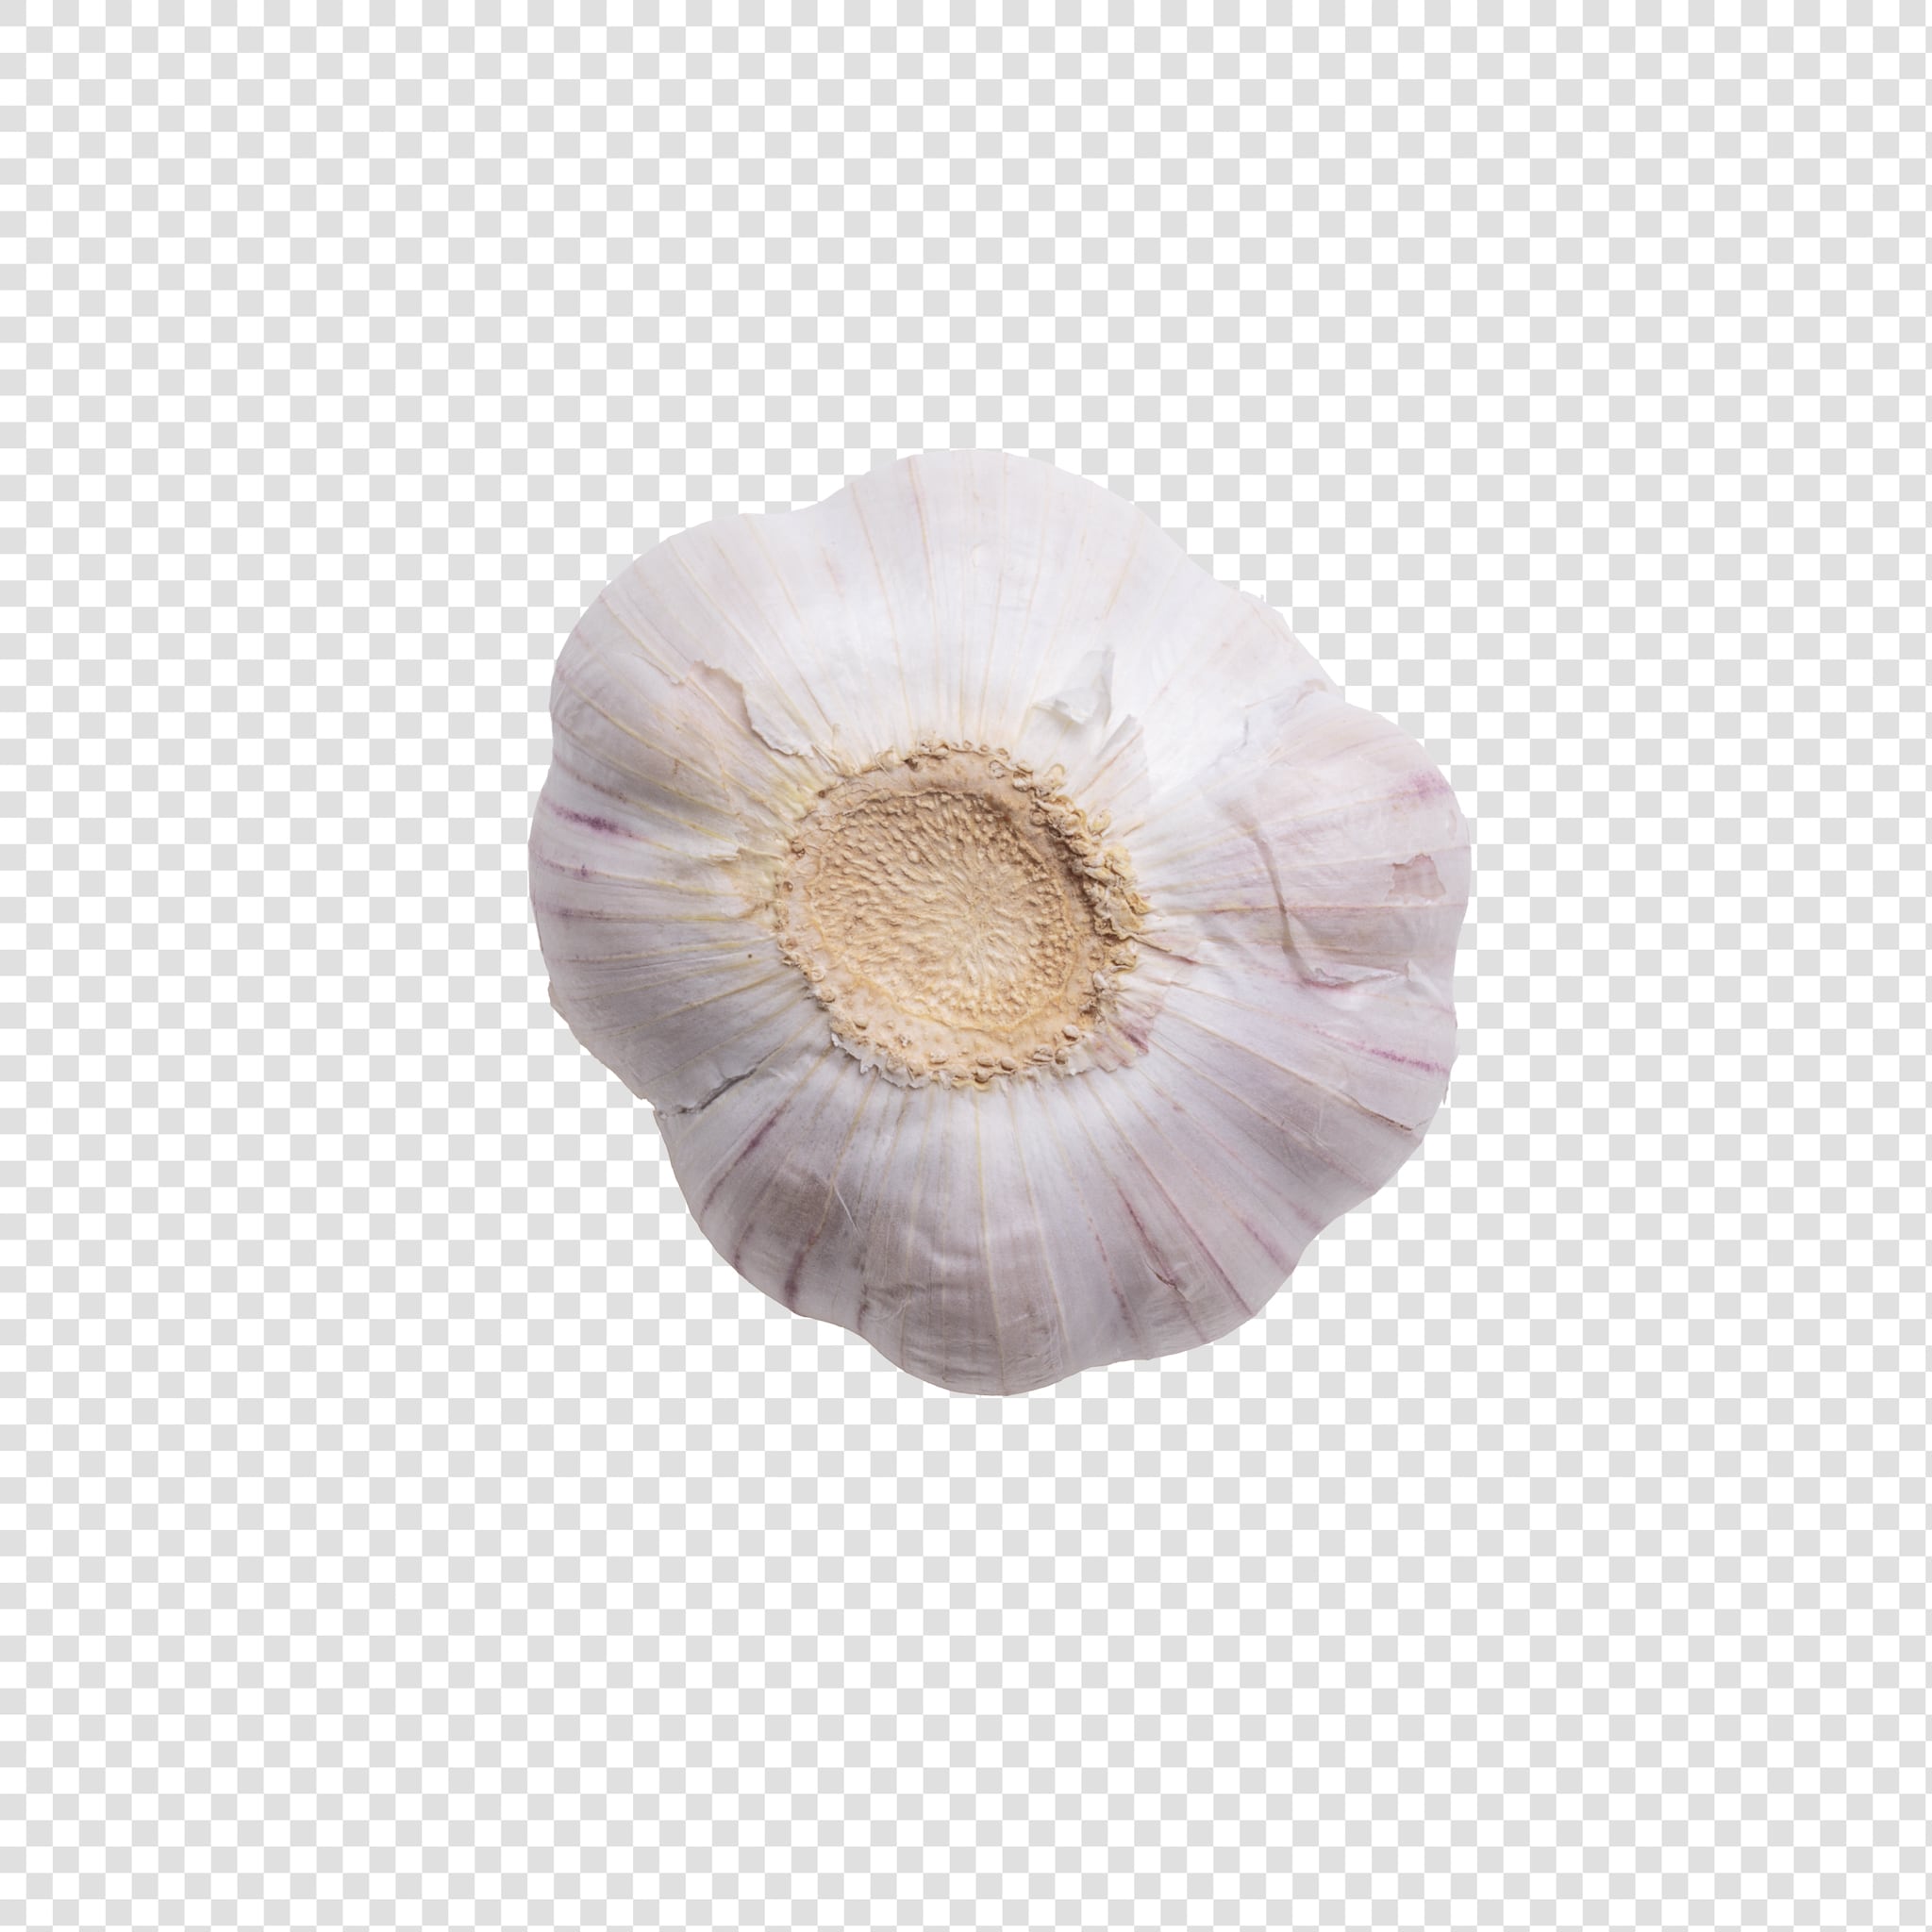 Garlic image asset with transparent background